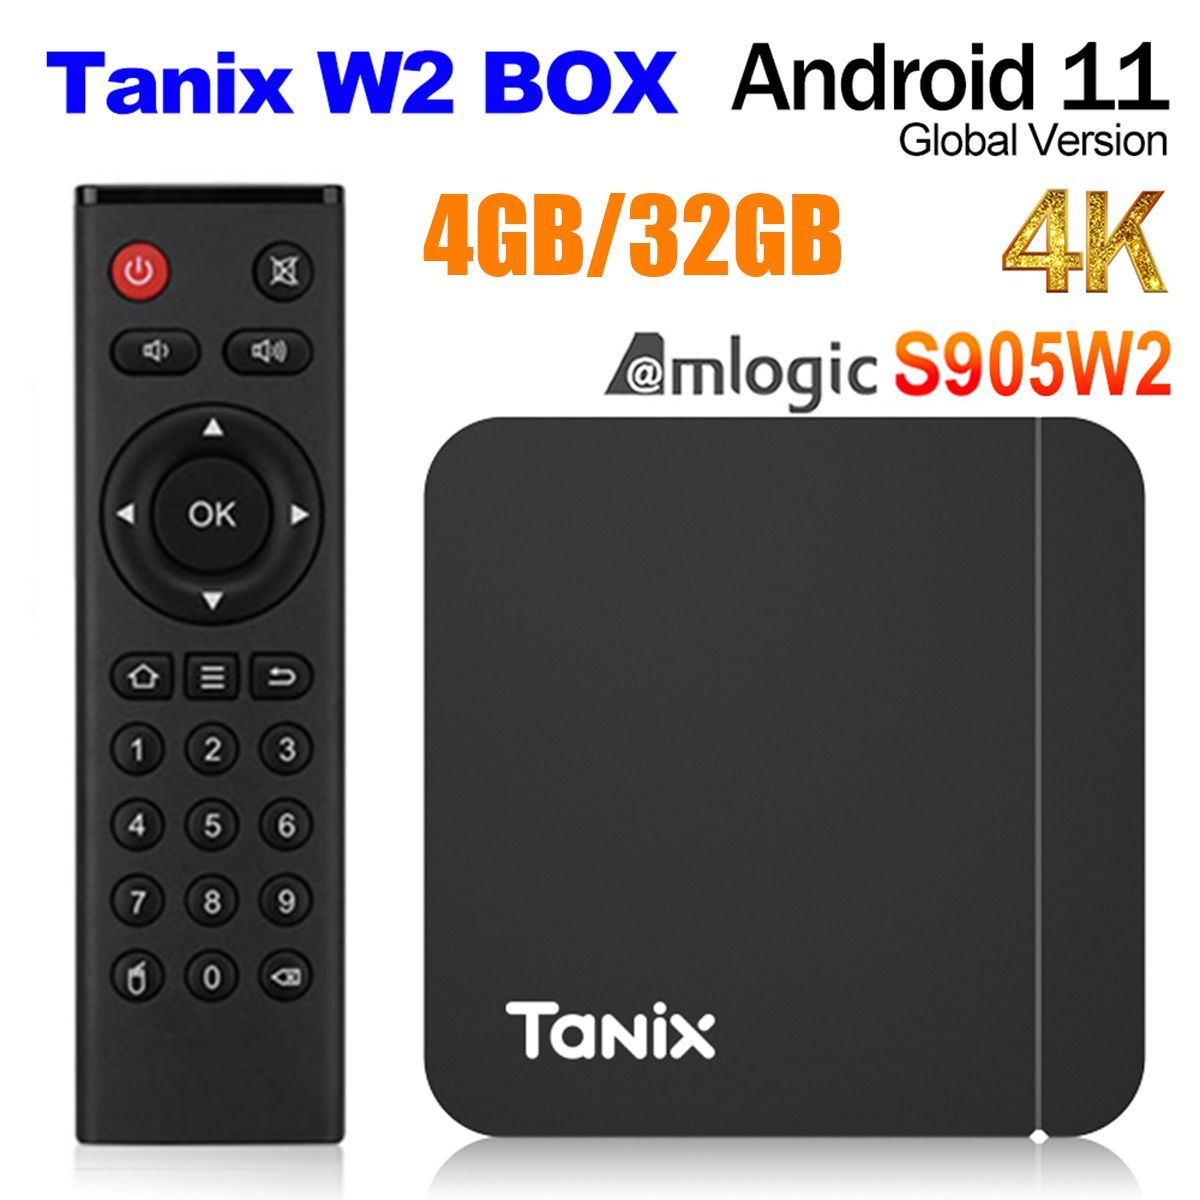 TanixМедиаплеер4/32-w2Android,4ГБ/32ГБ,Bluetooth,Wi-Fi,черный